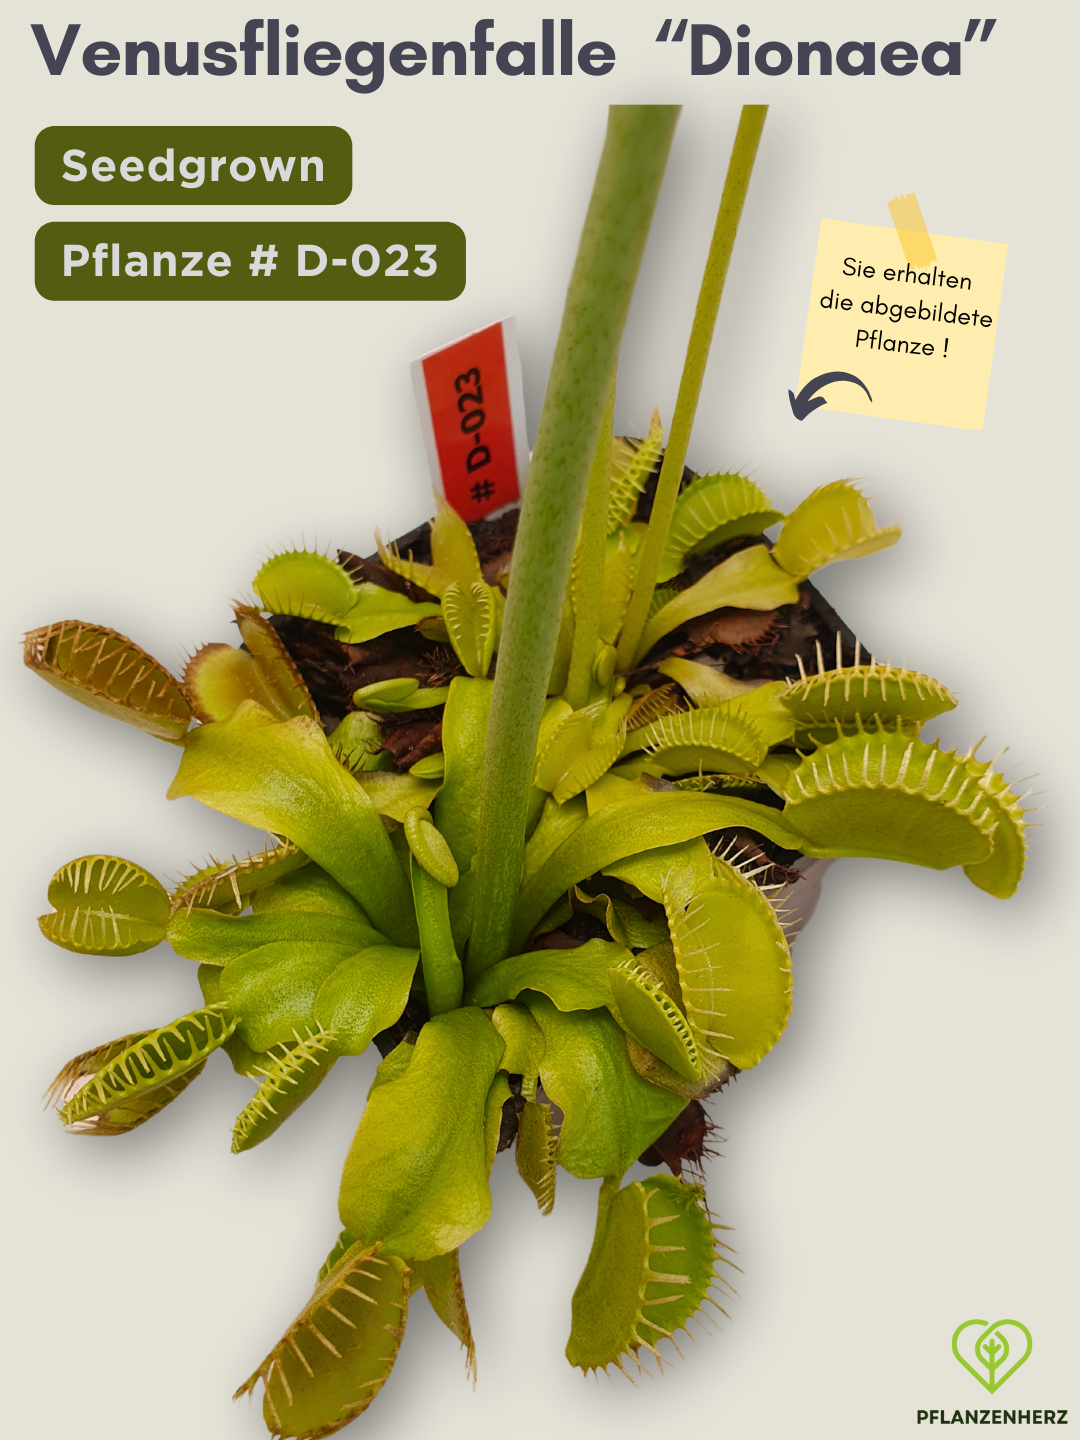 Venusfliegenfalle "Dionaea muscipula" Karnivoren, getopft 7x7cm, #D-023